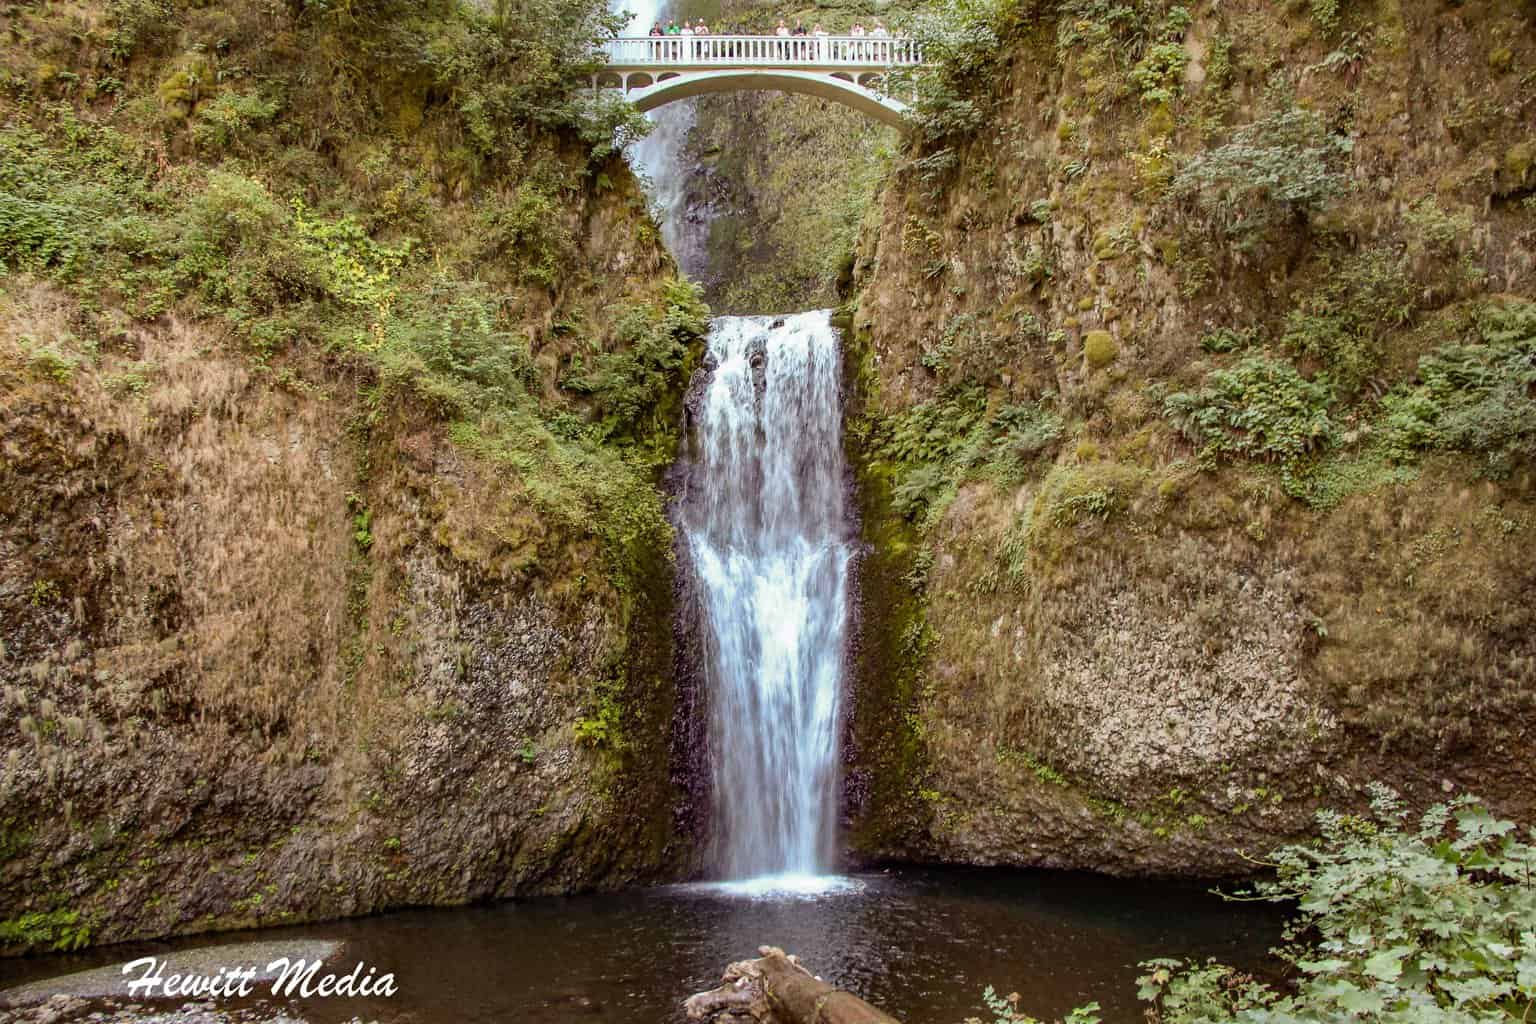 The Definitive Multnomah Falls Guide for Visitors to Portland, Oregon